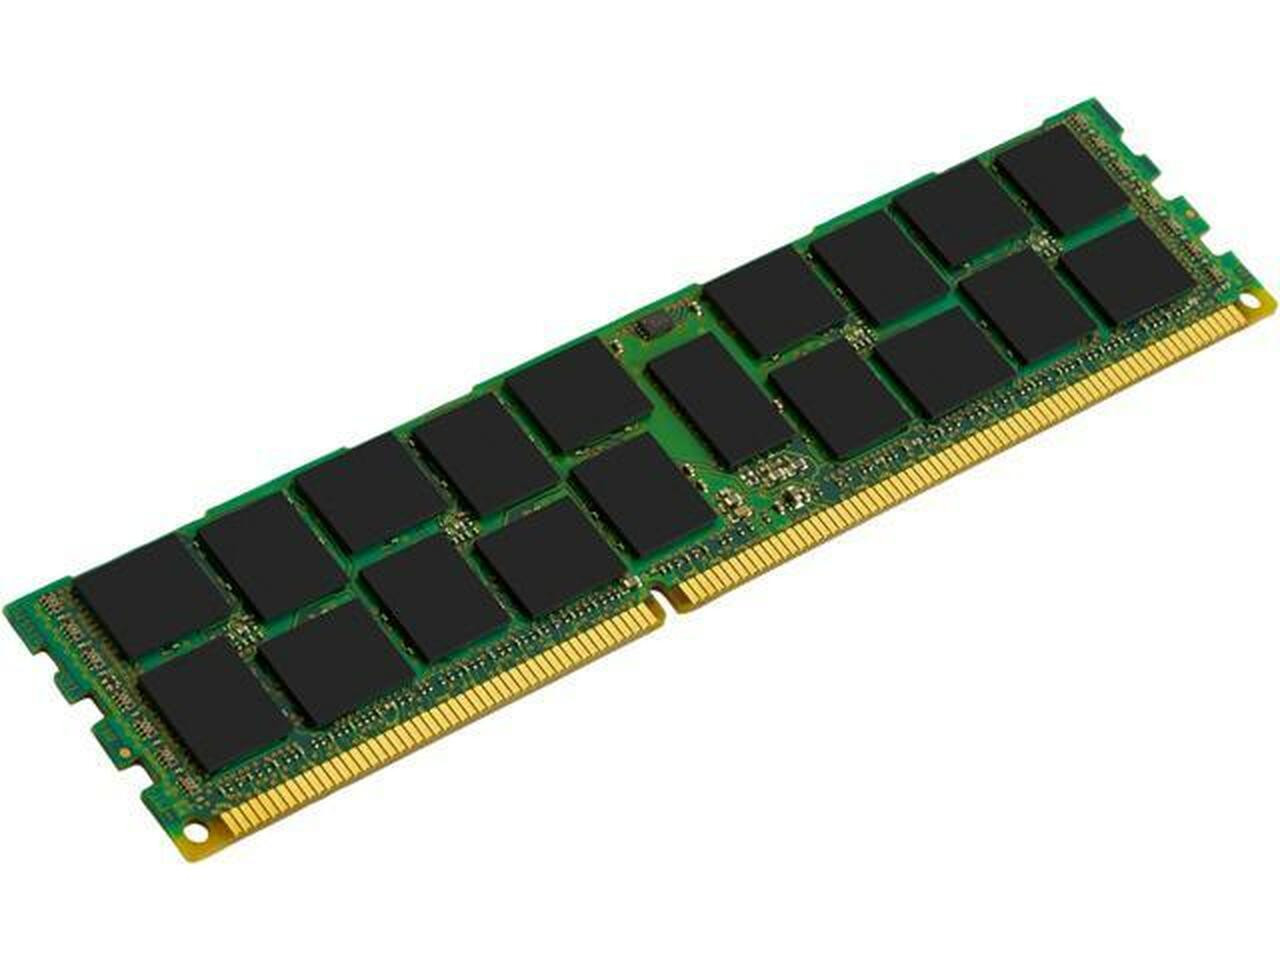 Netpatibles 4GB DDR3 SDRAM Memory Module - MEMDR340LSL04ER13NPM